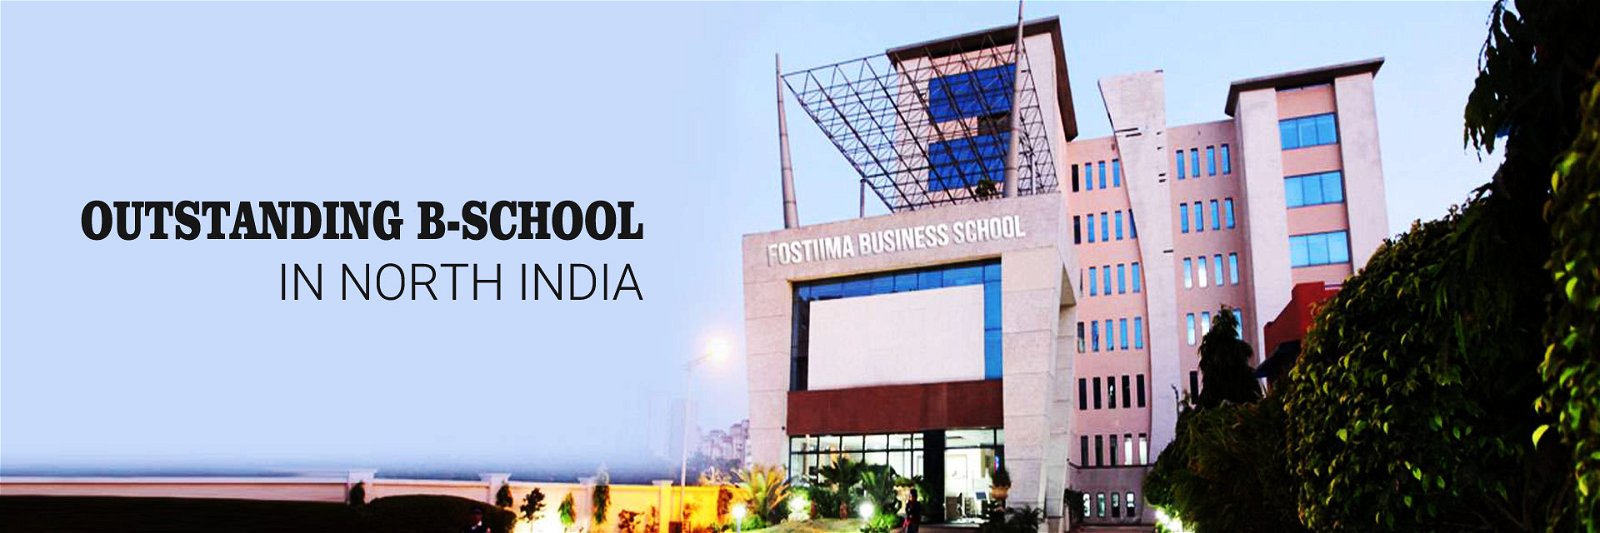 campus Fostiima Business School New Delhi